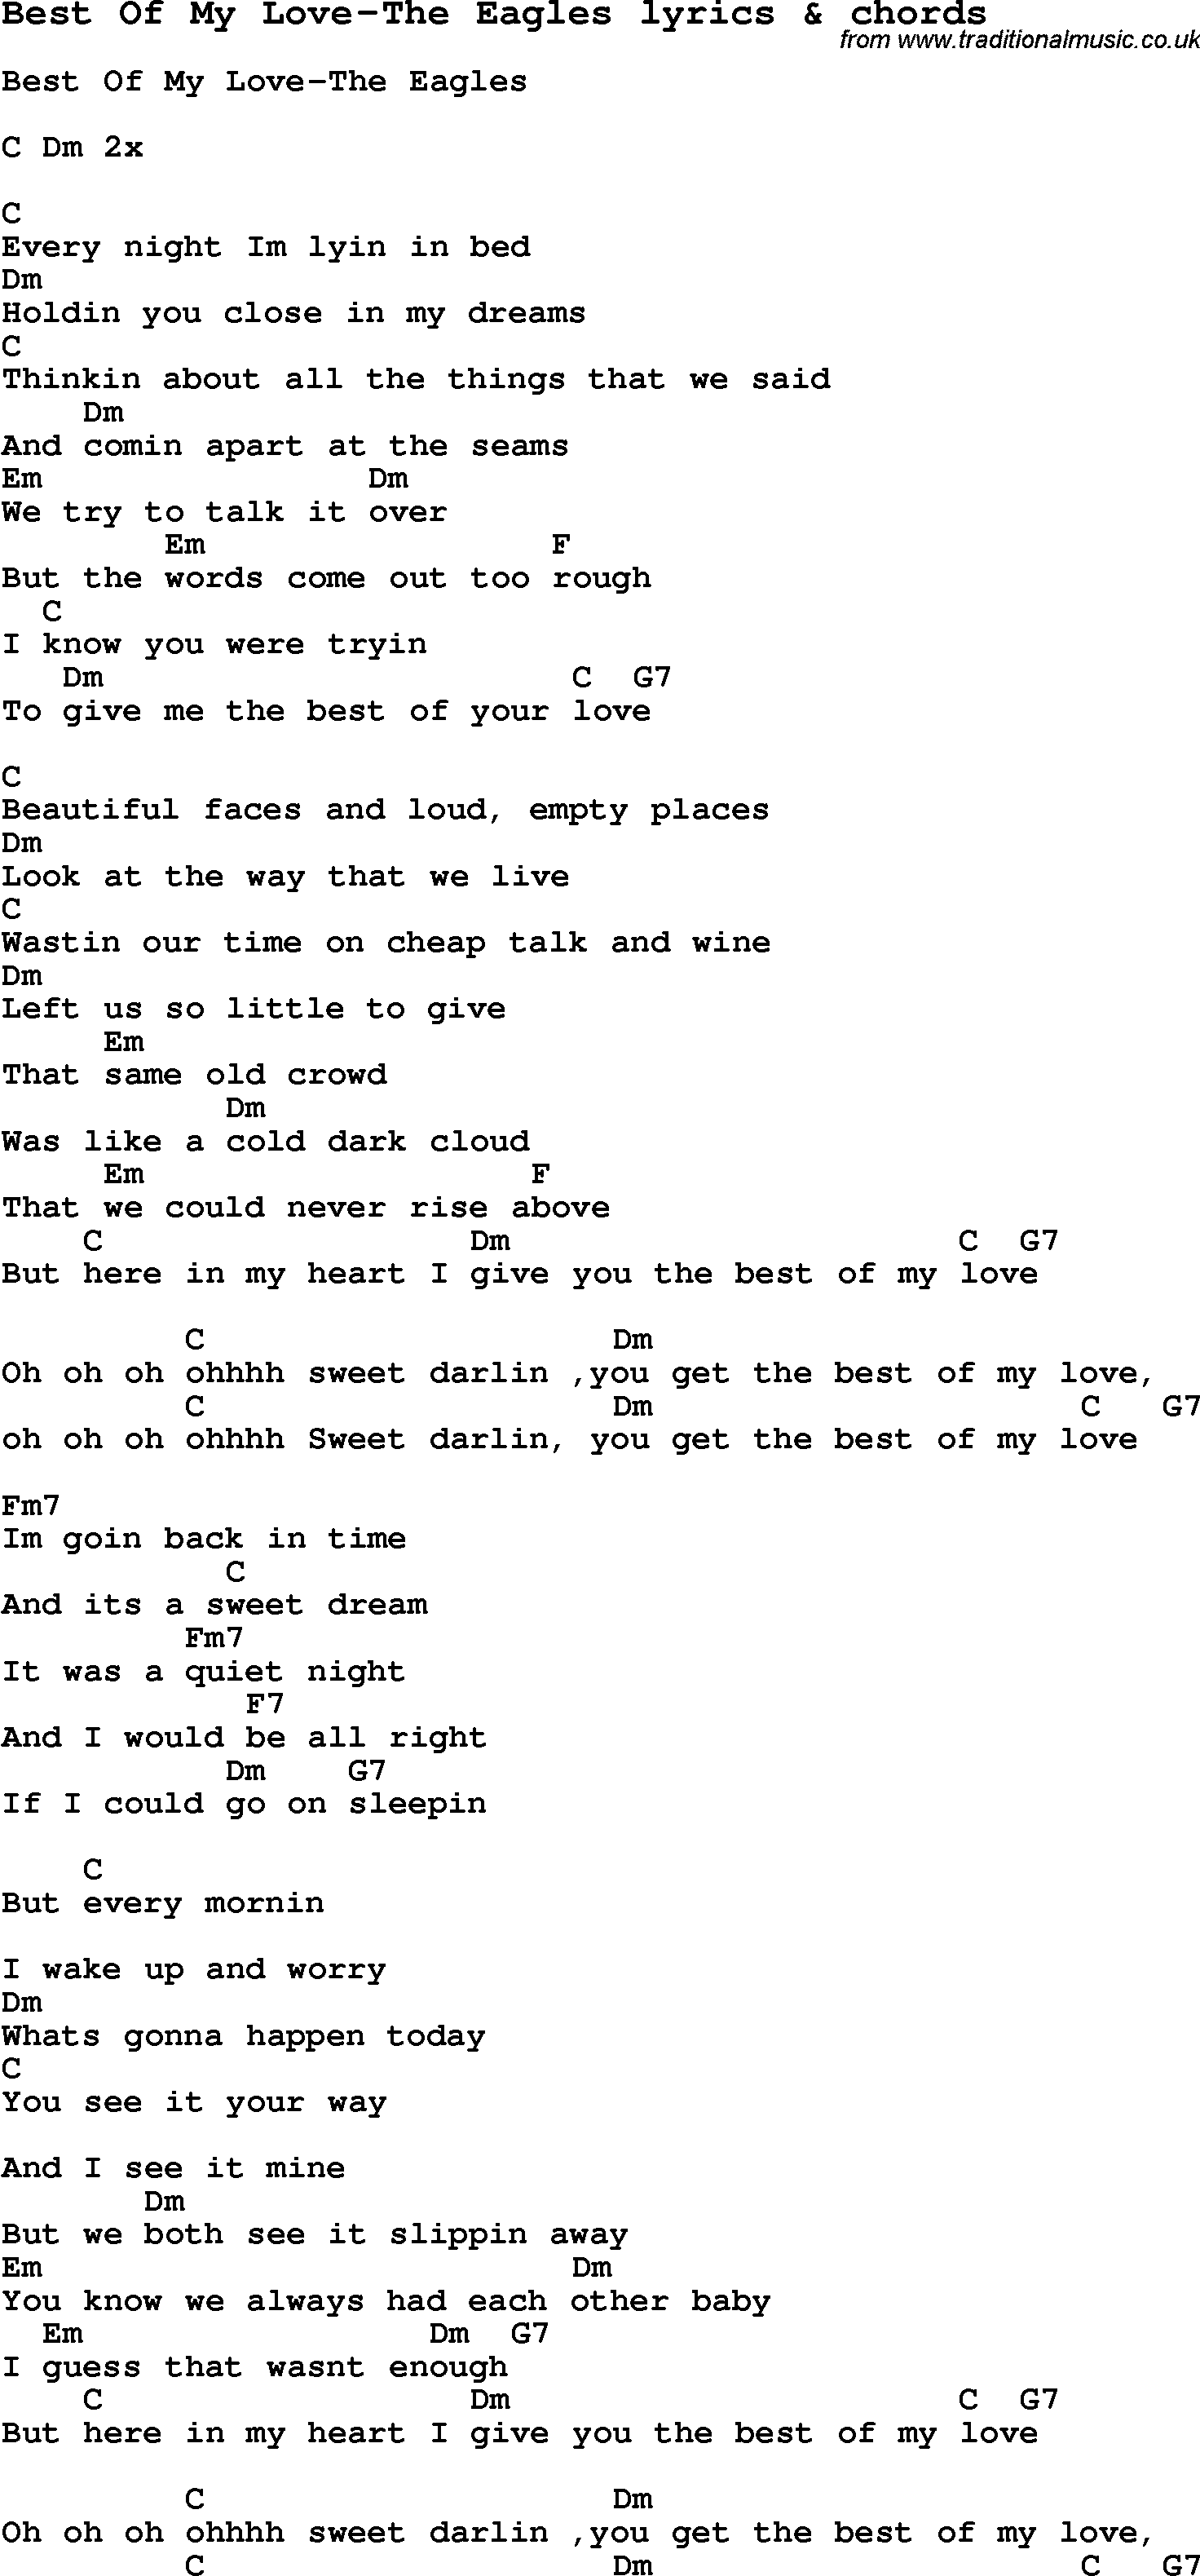 Eagles Lyrics 